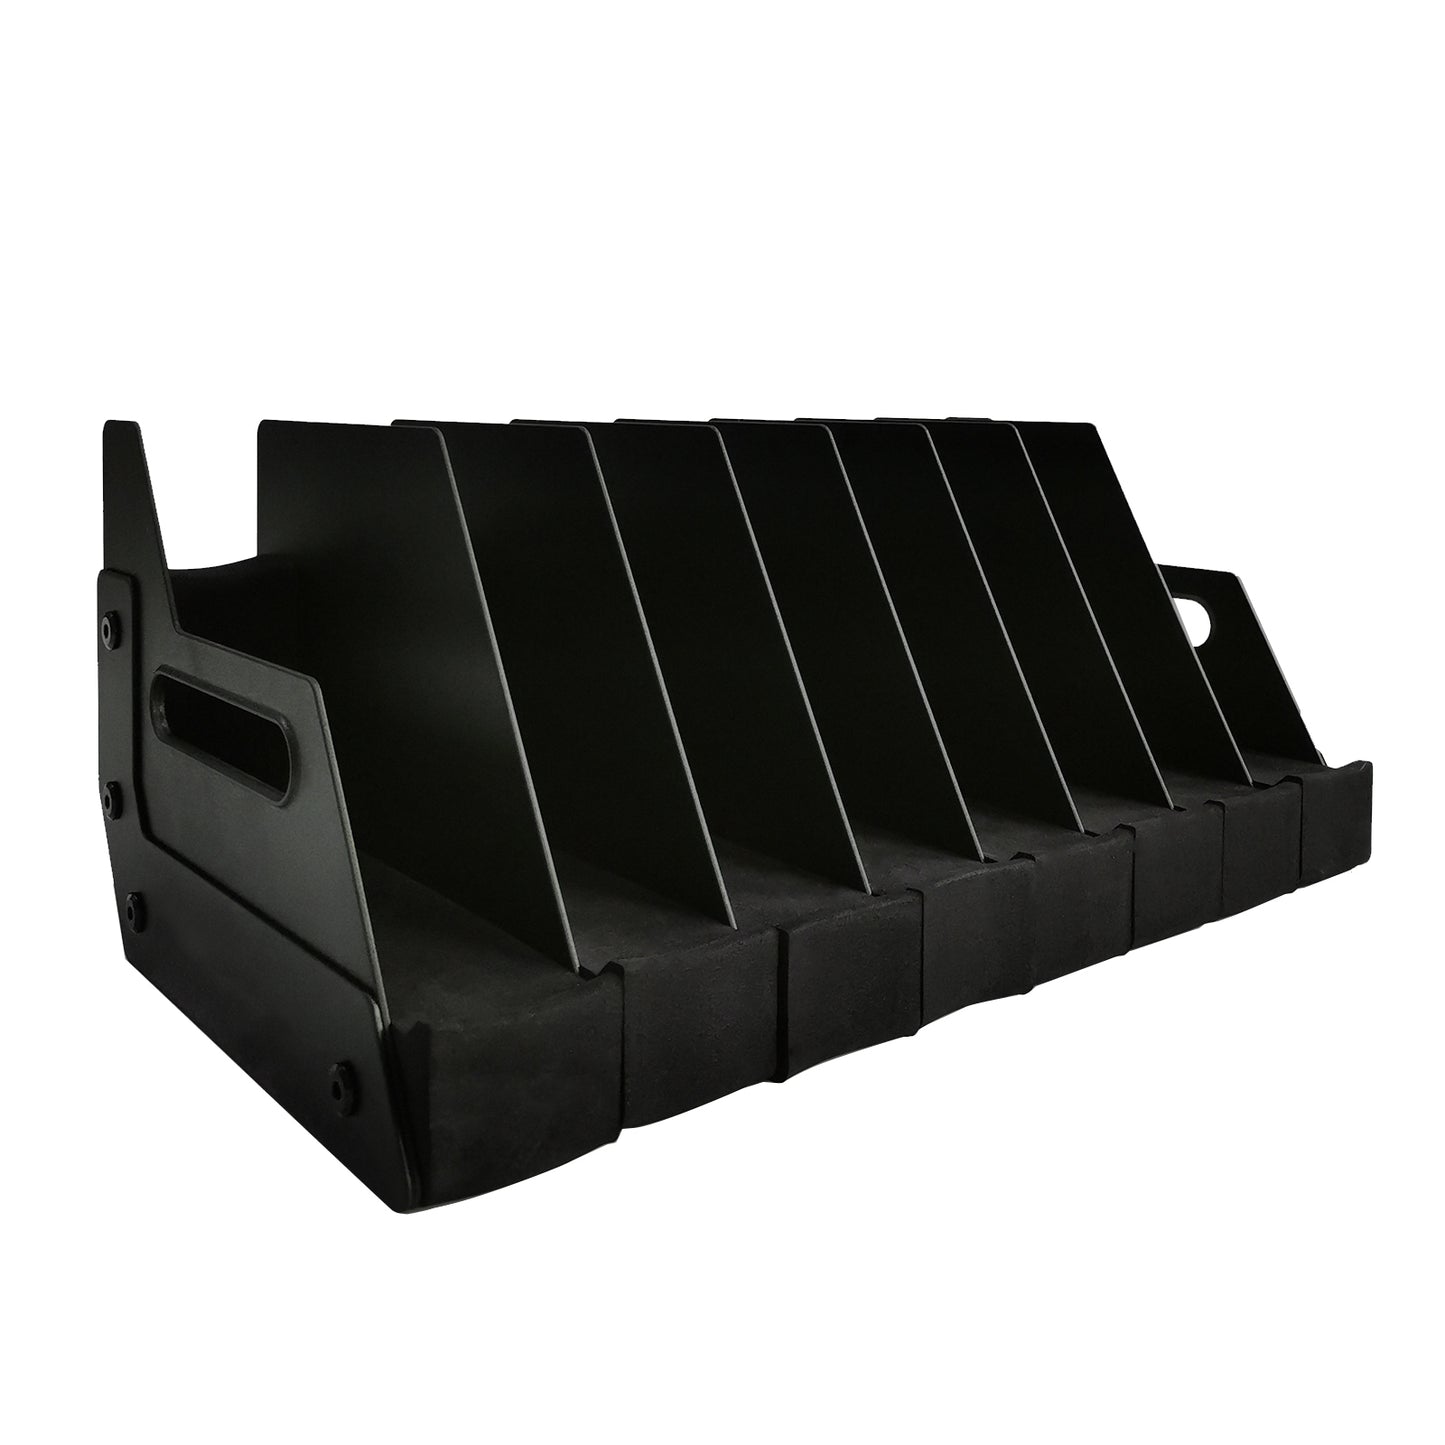 8 Seat Pistol Rack Protection Display Rack